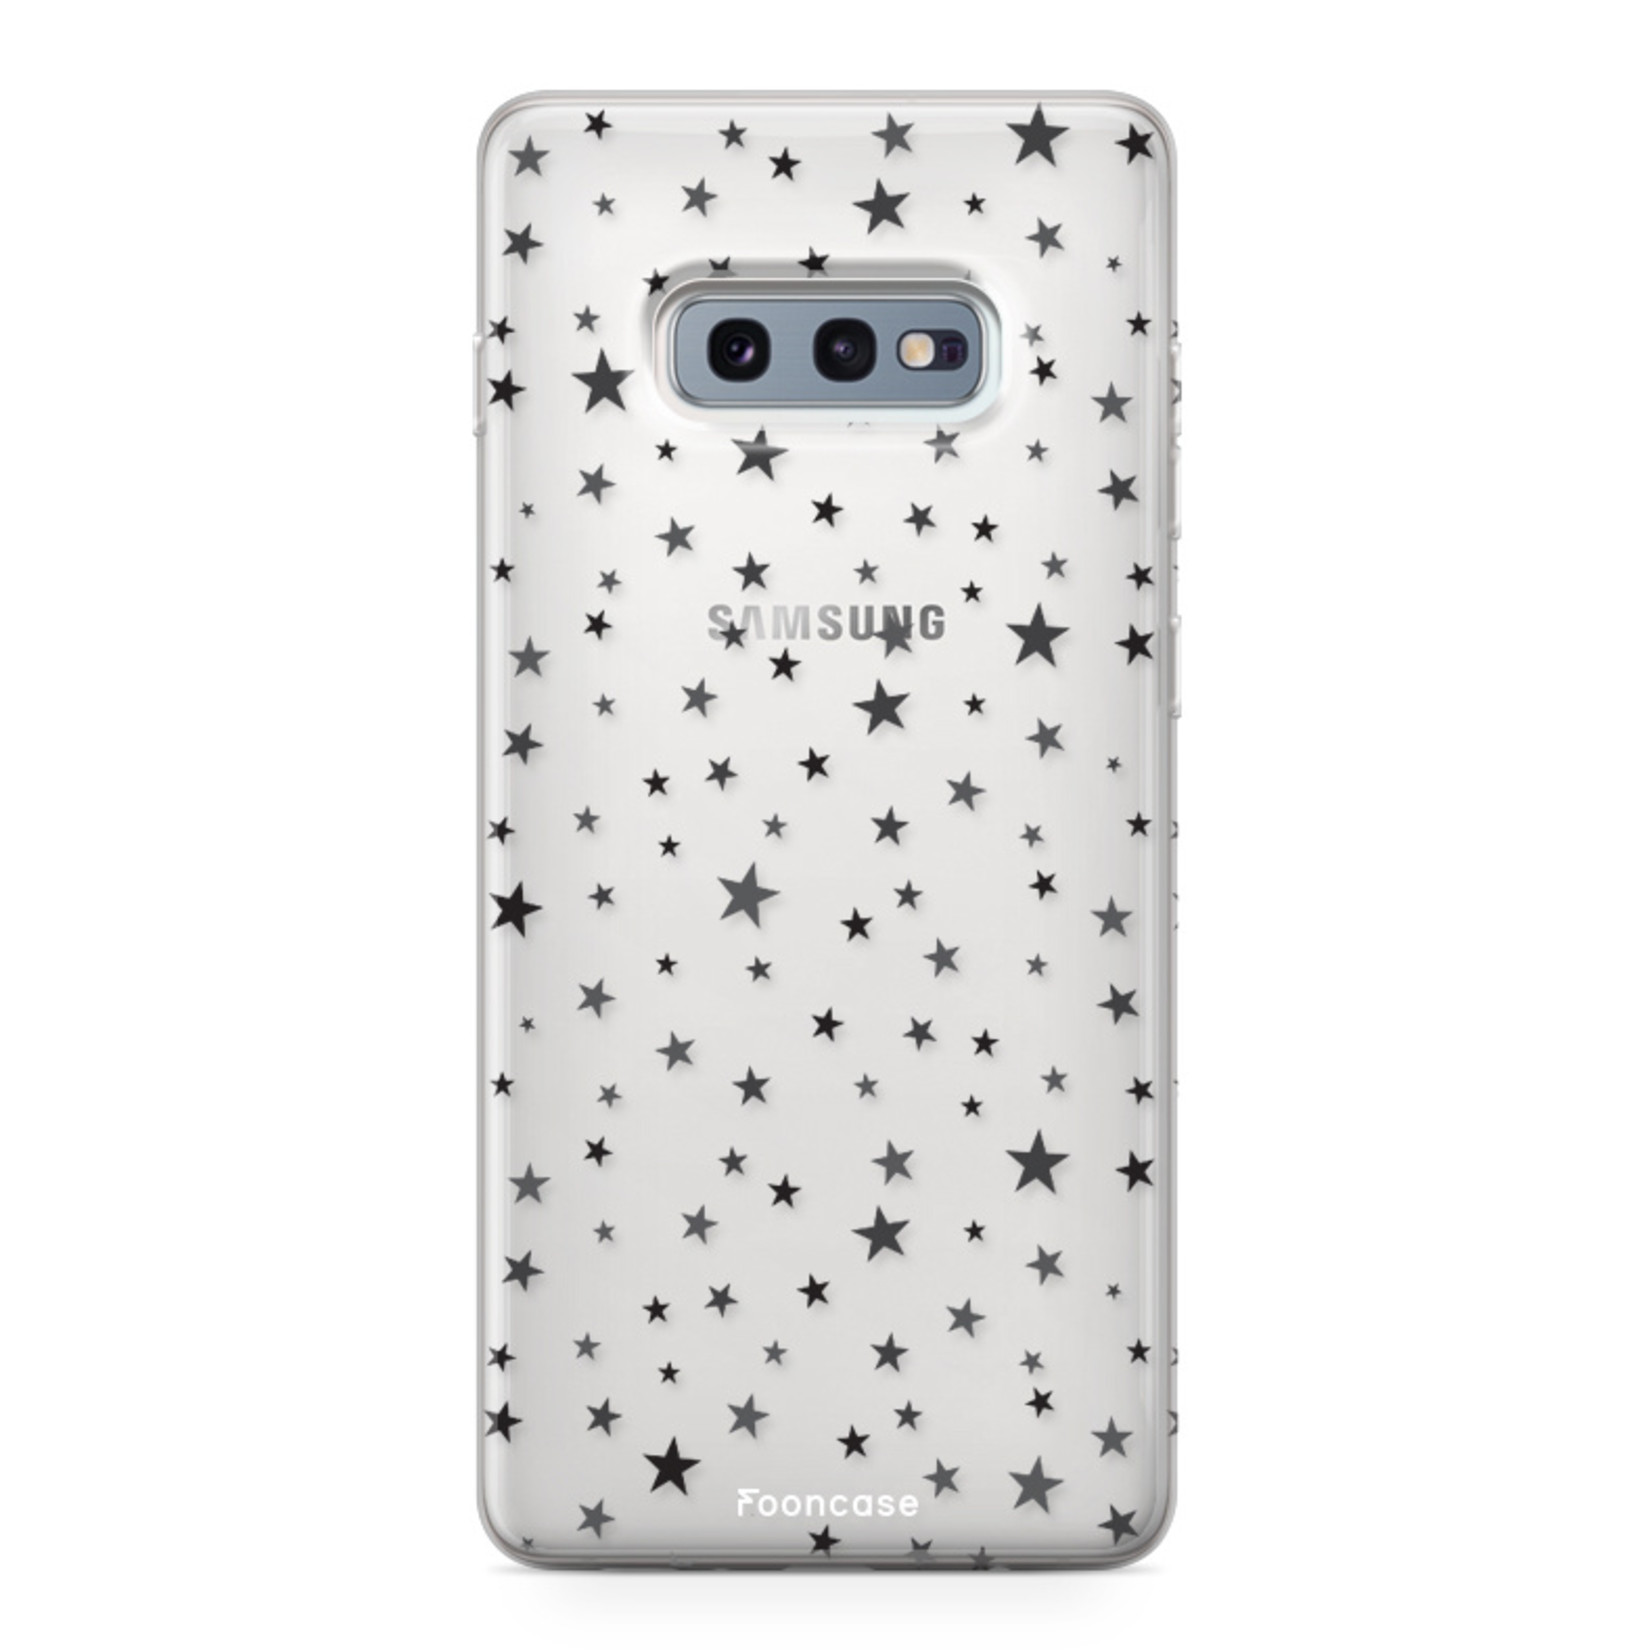 FOONCASE | Sterretjes telefoonhoesje | Samsung Galaxy S10e - FOONCASE - fave case store!